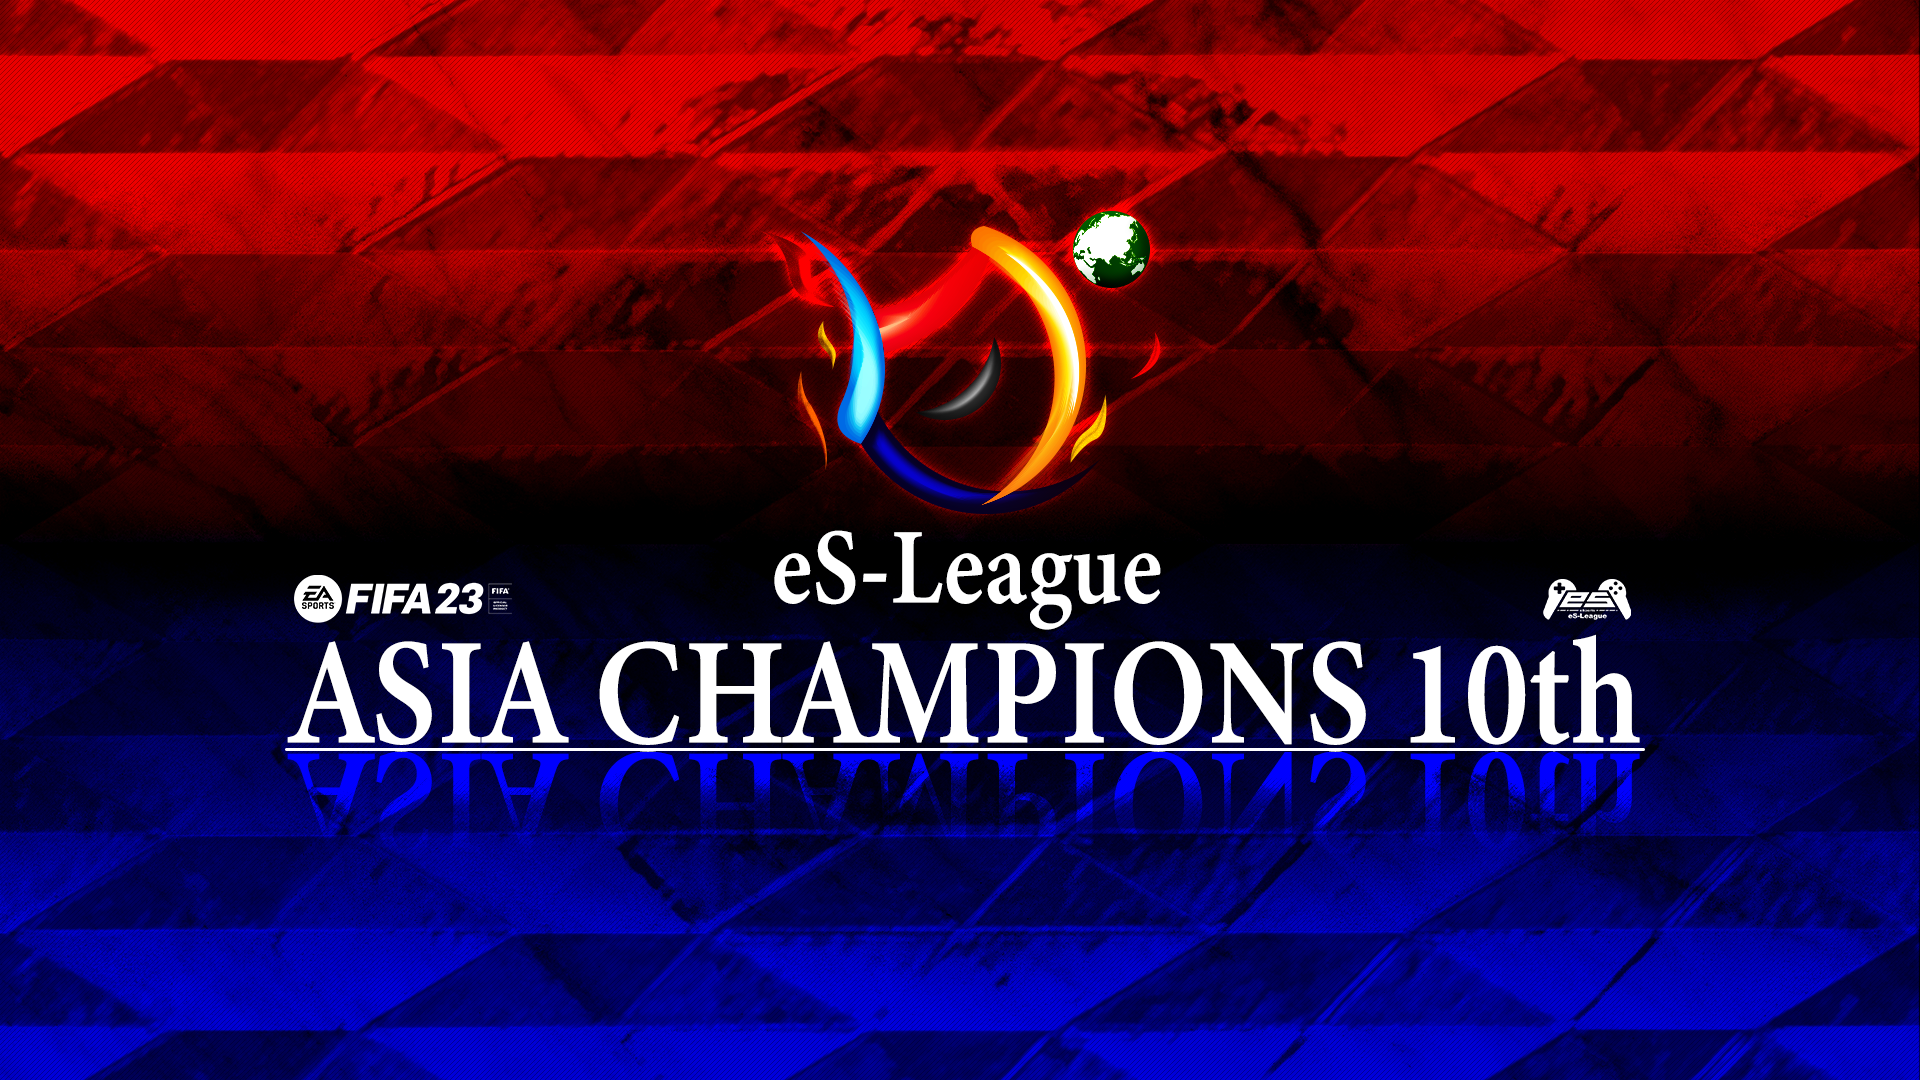 eS-League ASIA CHAMPIONS 10th